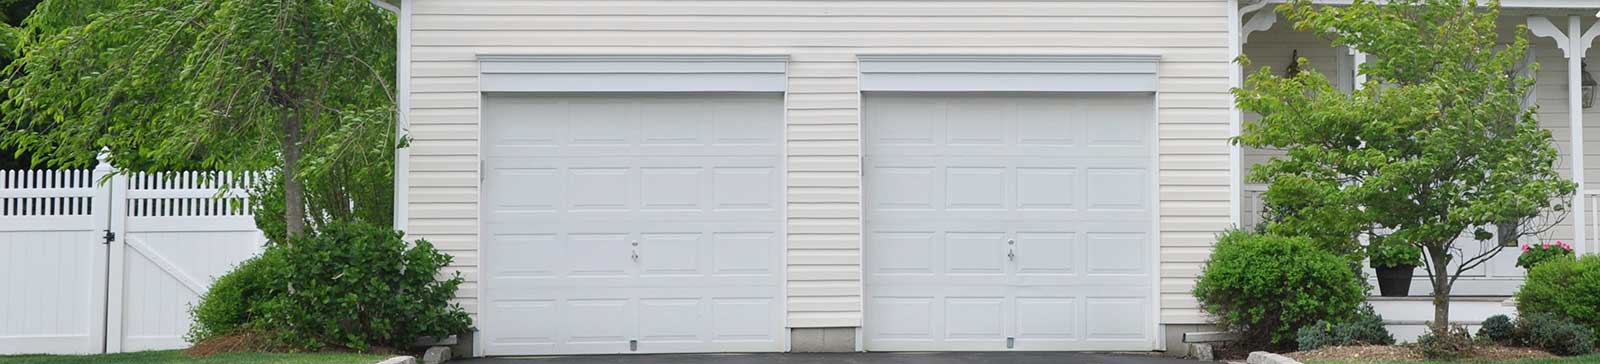 Garage Door Repair Experts Near Me | Tacoma